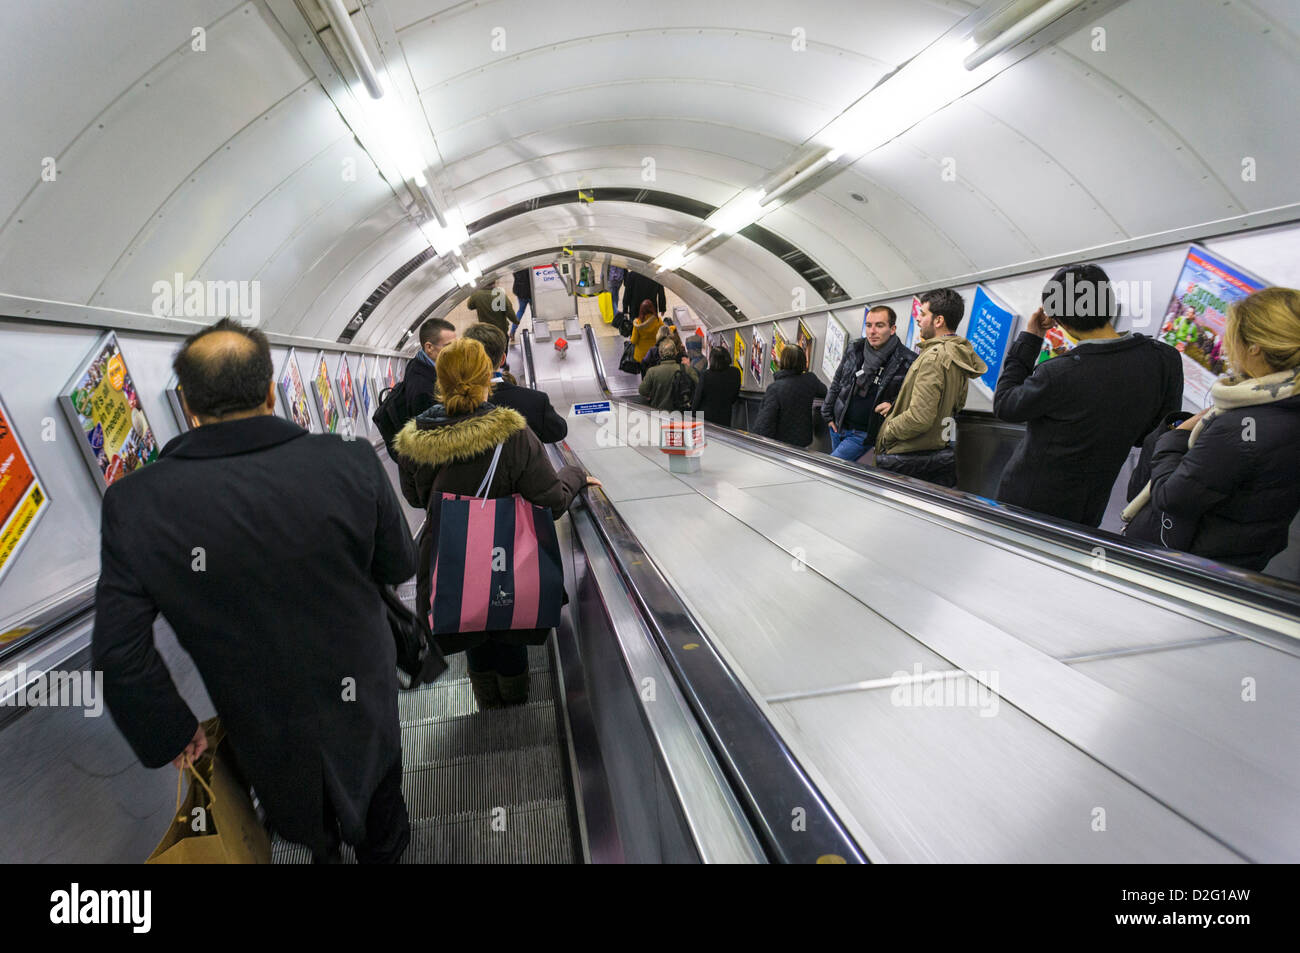 La station de métro de Londres, avec les gens de descendre l'escalator Banque D'Images